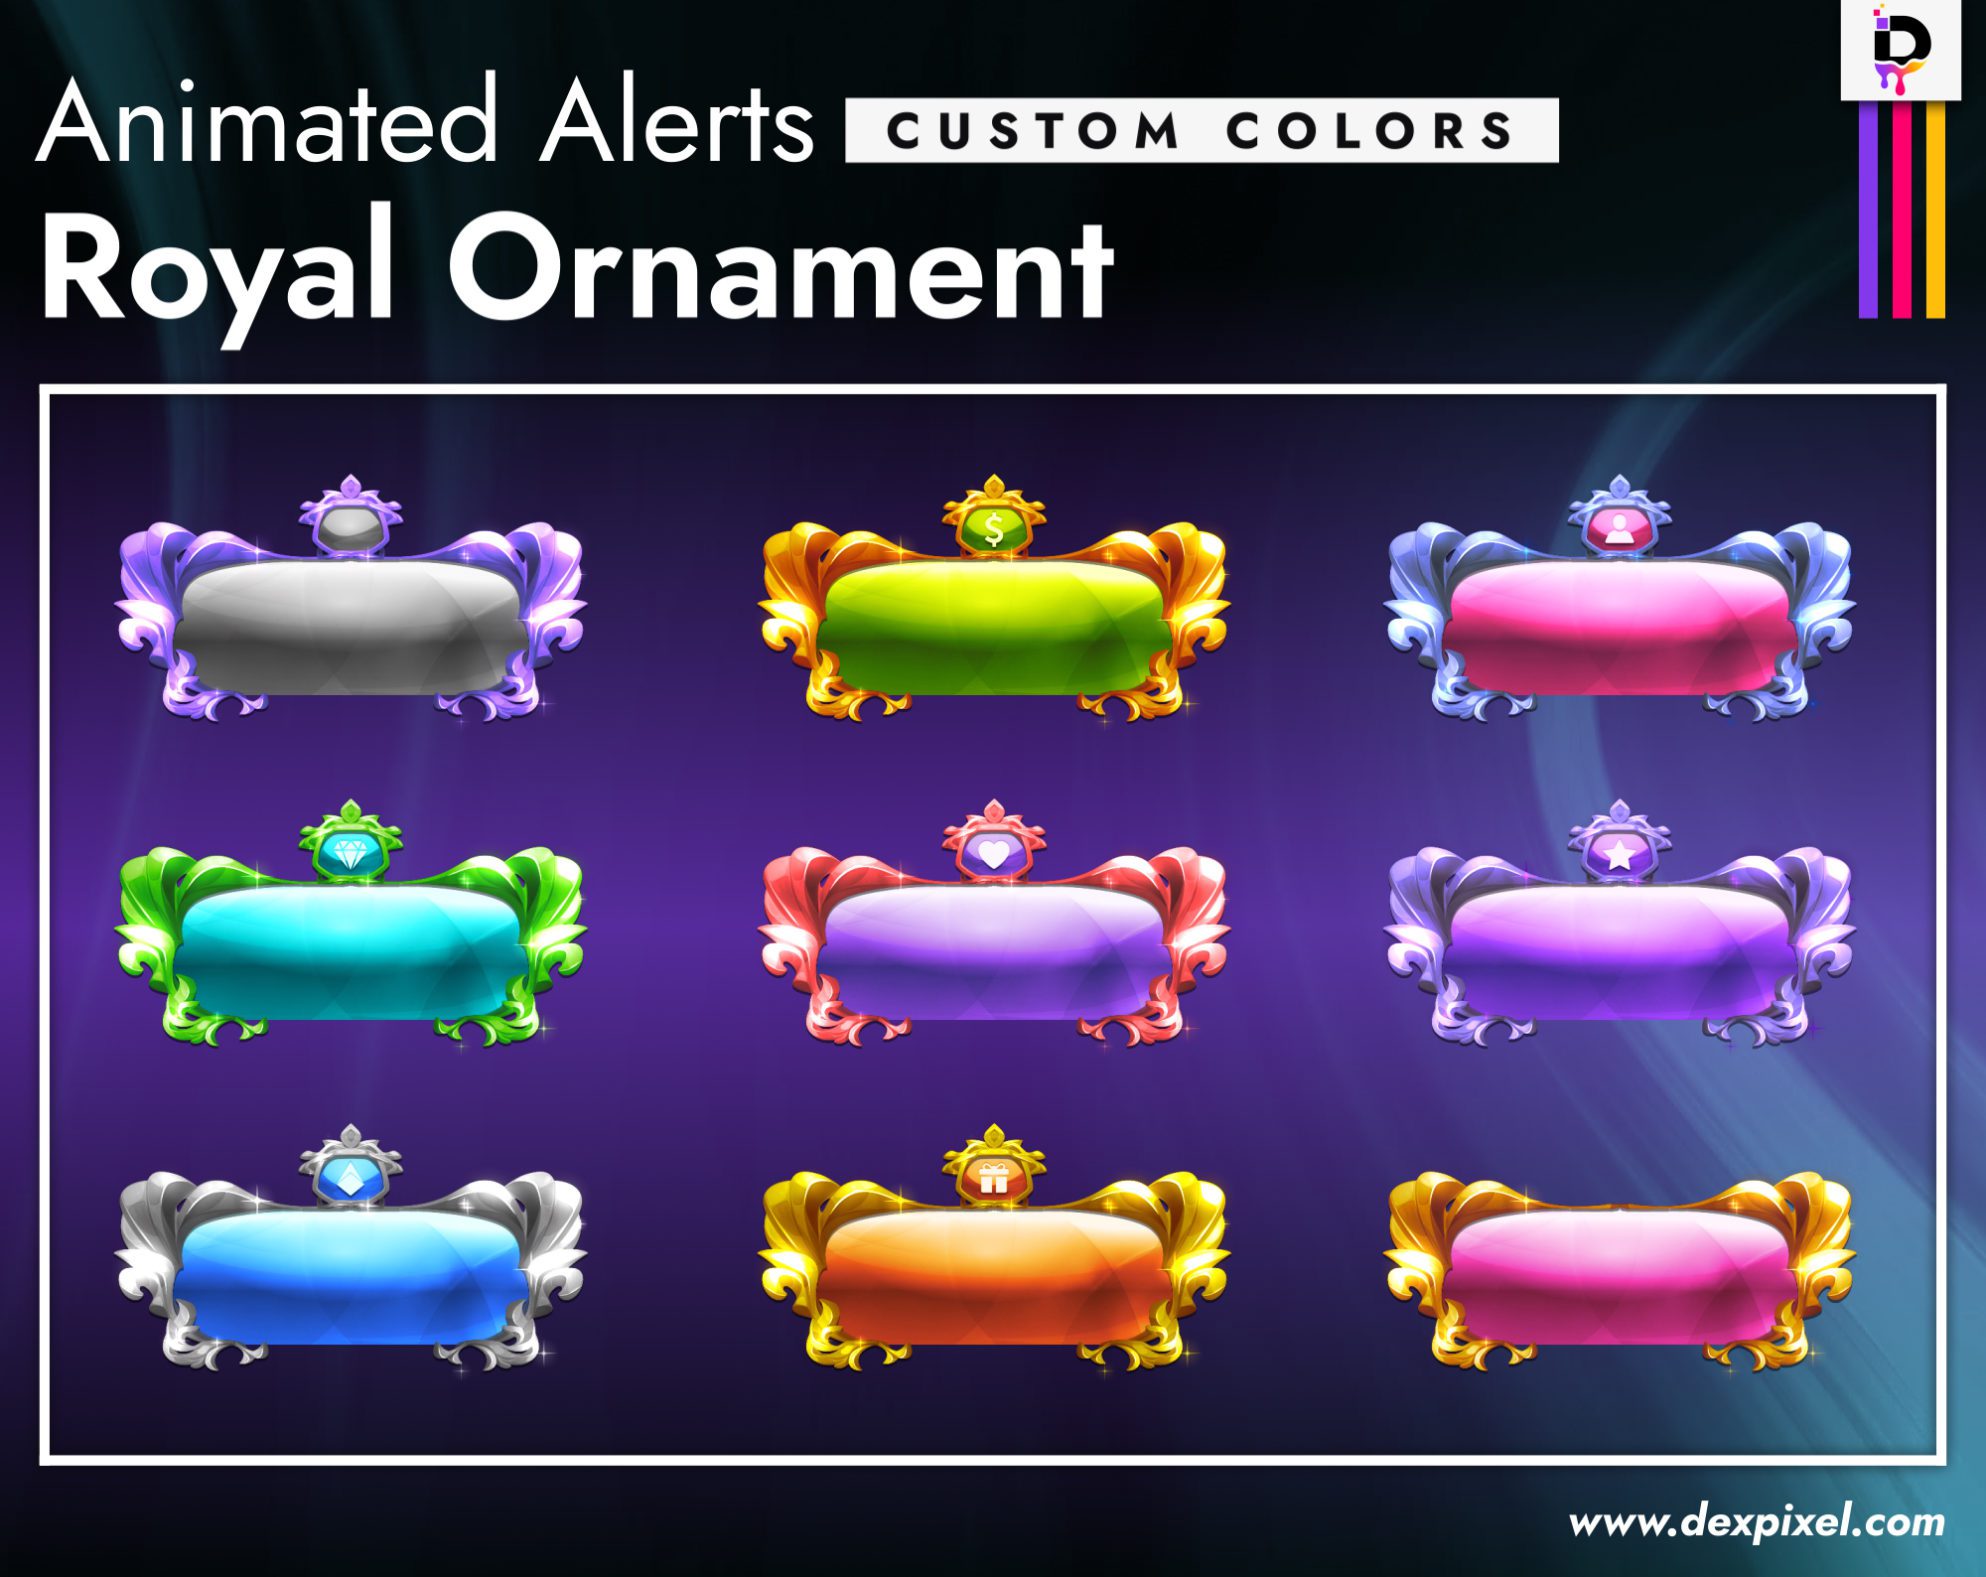 Animated Alerts DexPixel Royal Ornament Custom